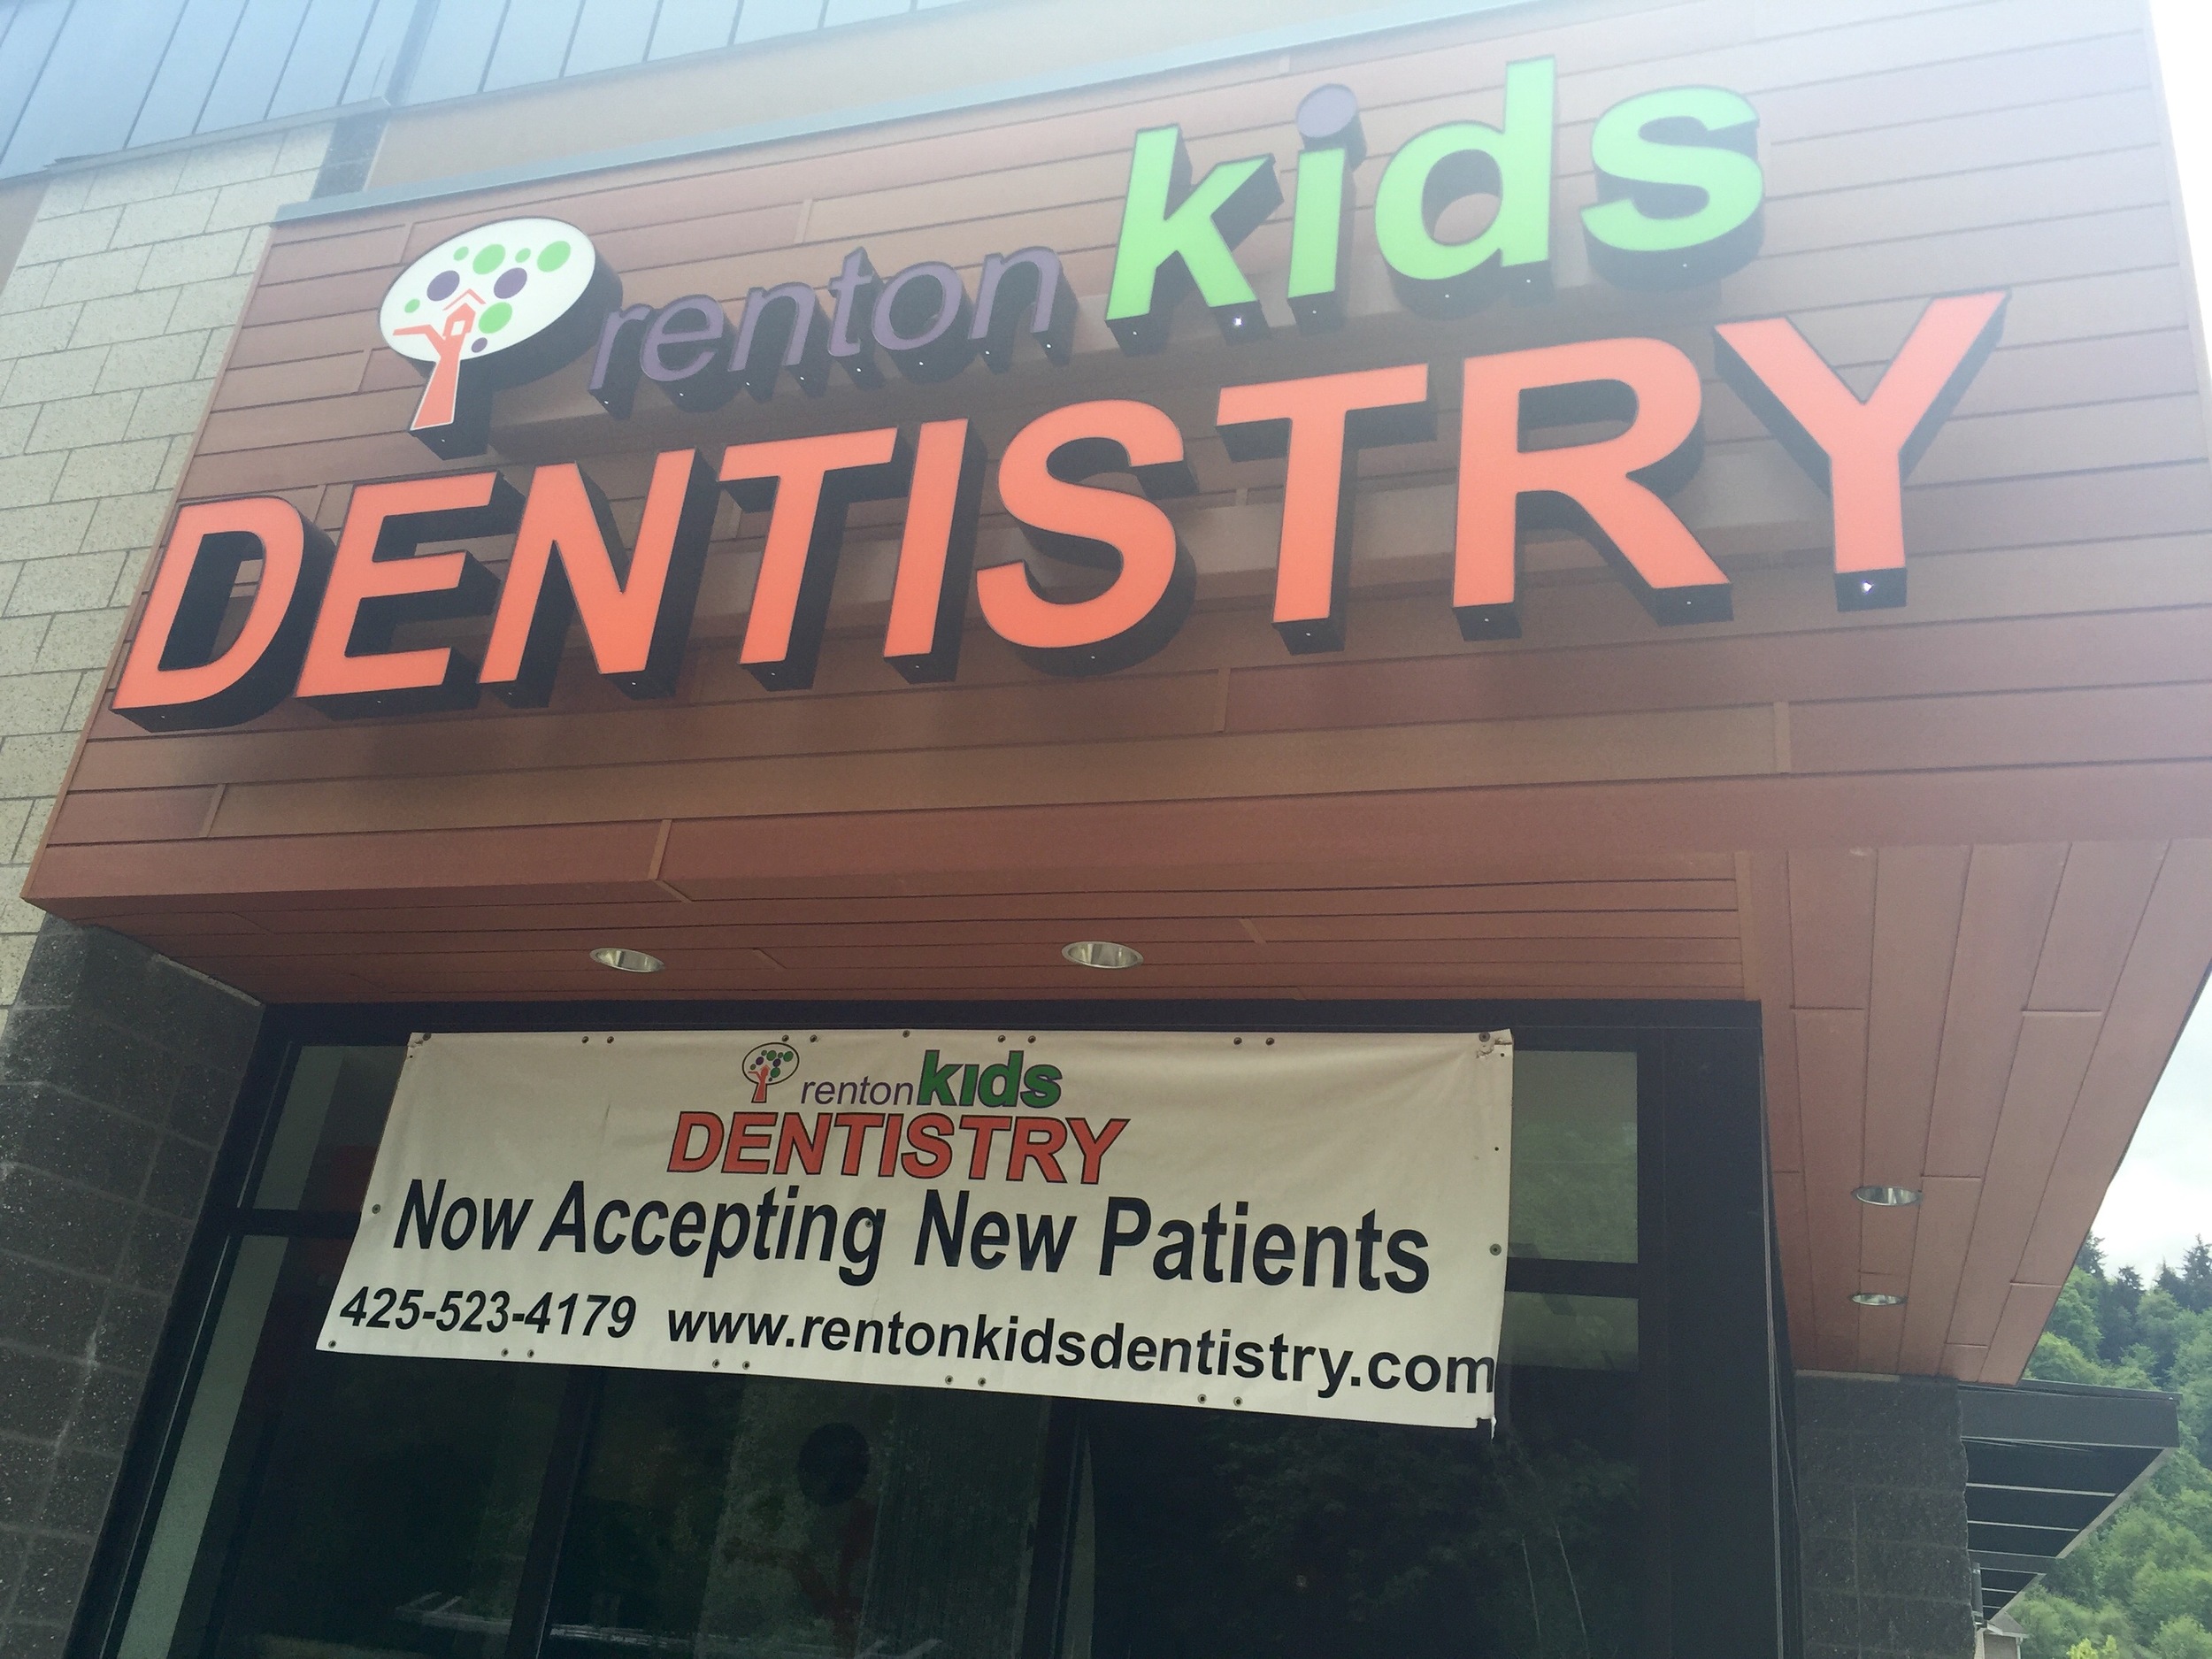 CRS 6 - Dentistry Signage.jpg